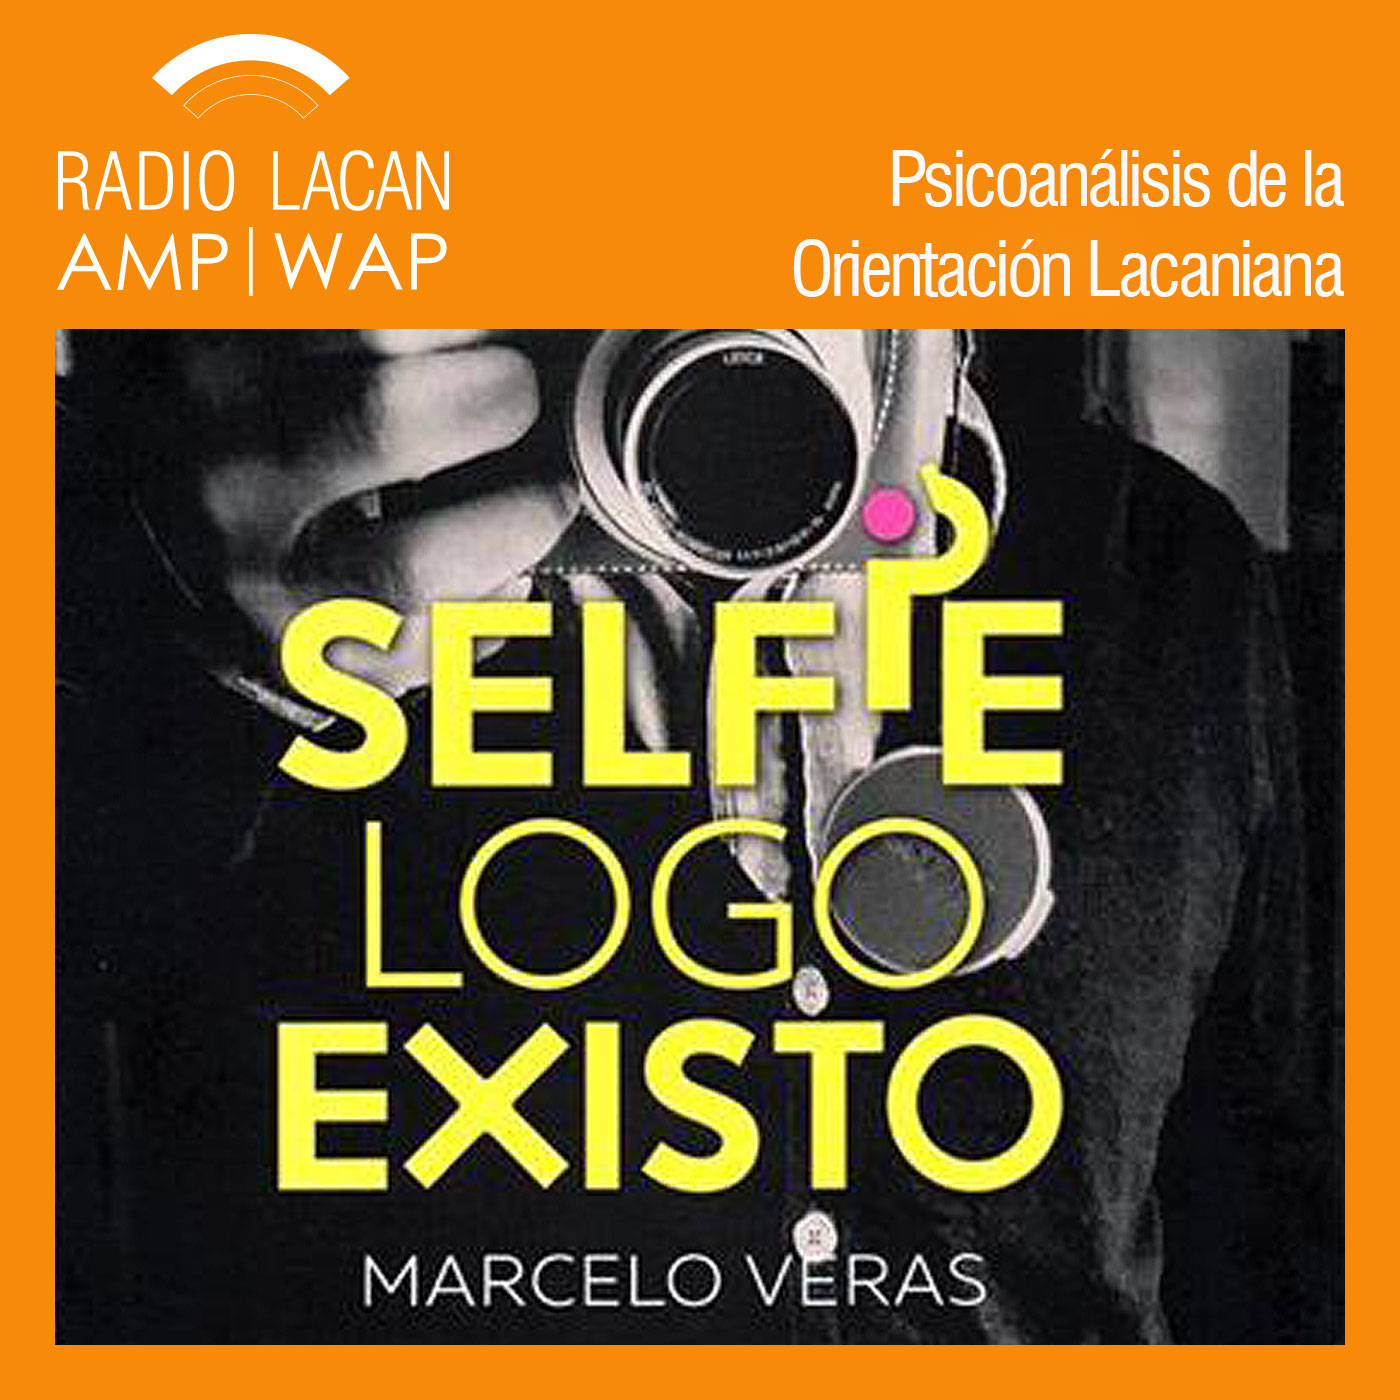 Entrevista a Marcelo Veras sobre su libro “Selfie, luego existo”. - Episodio 1